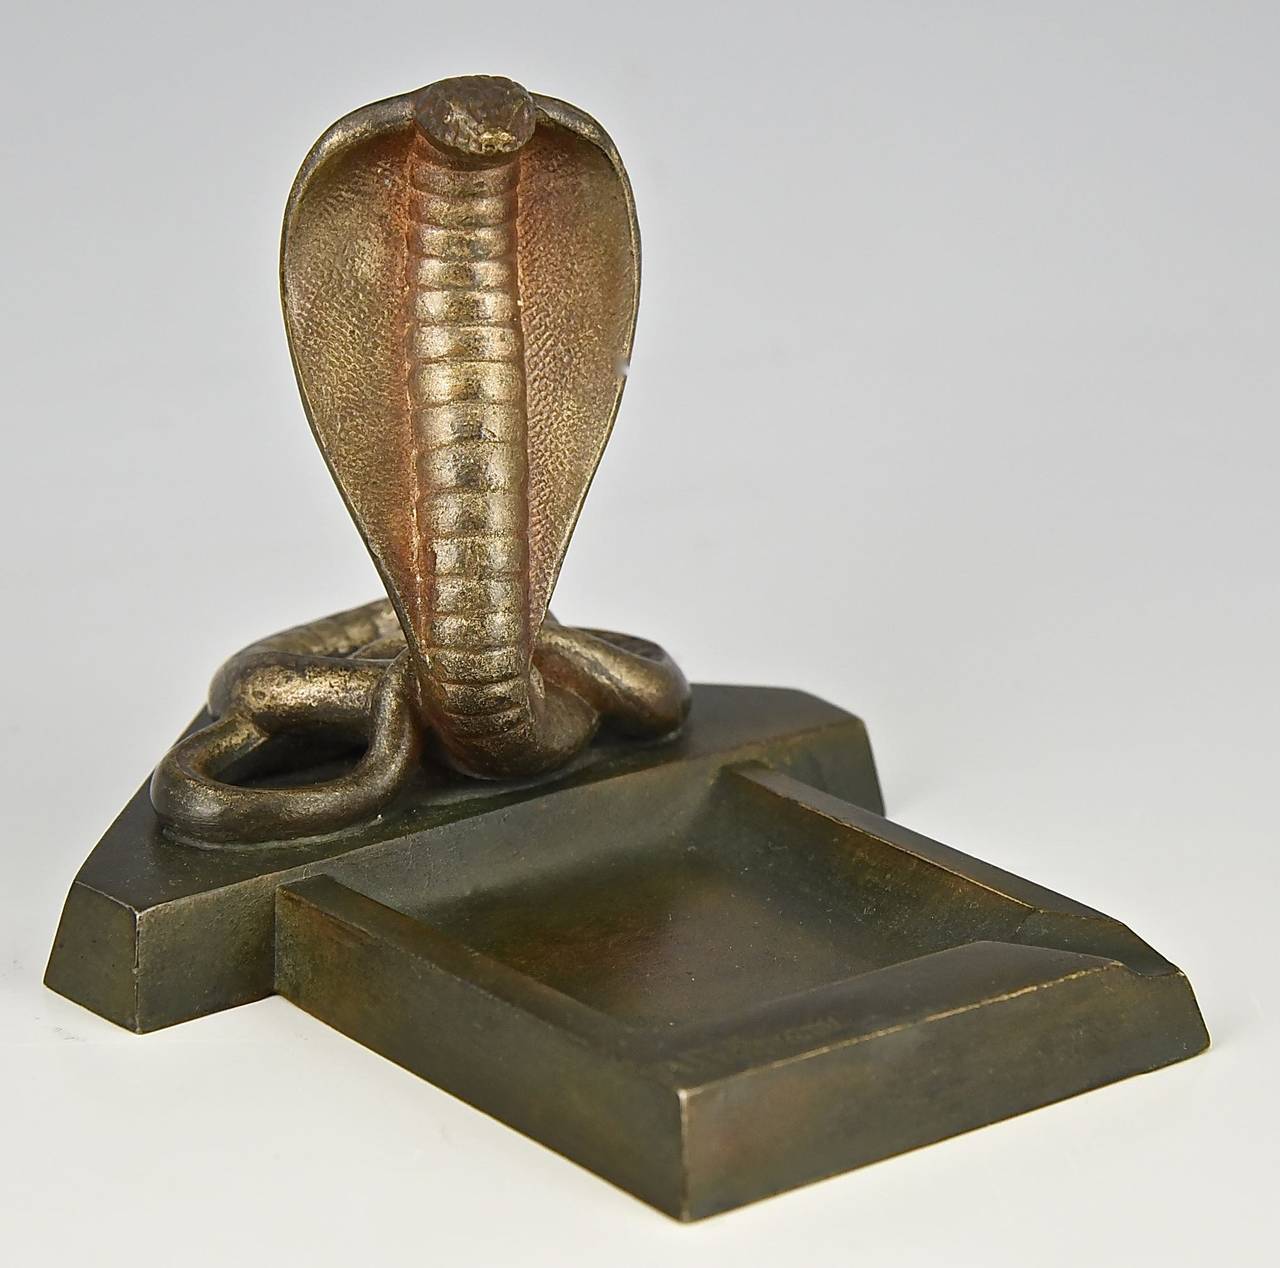 French Art Deco Cobra Ashtray by Pichegru 1930